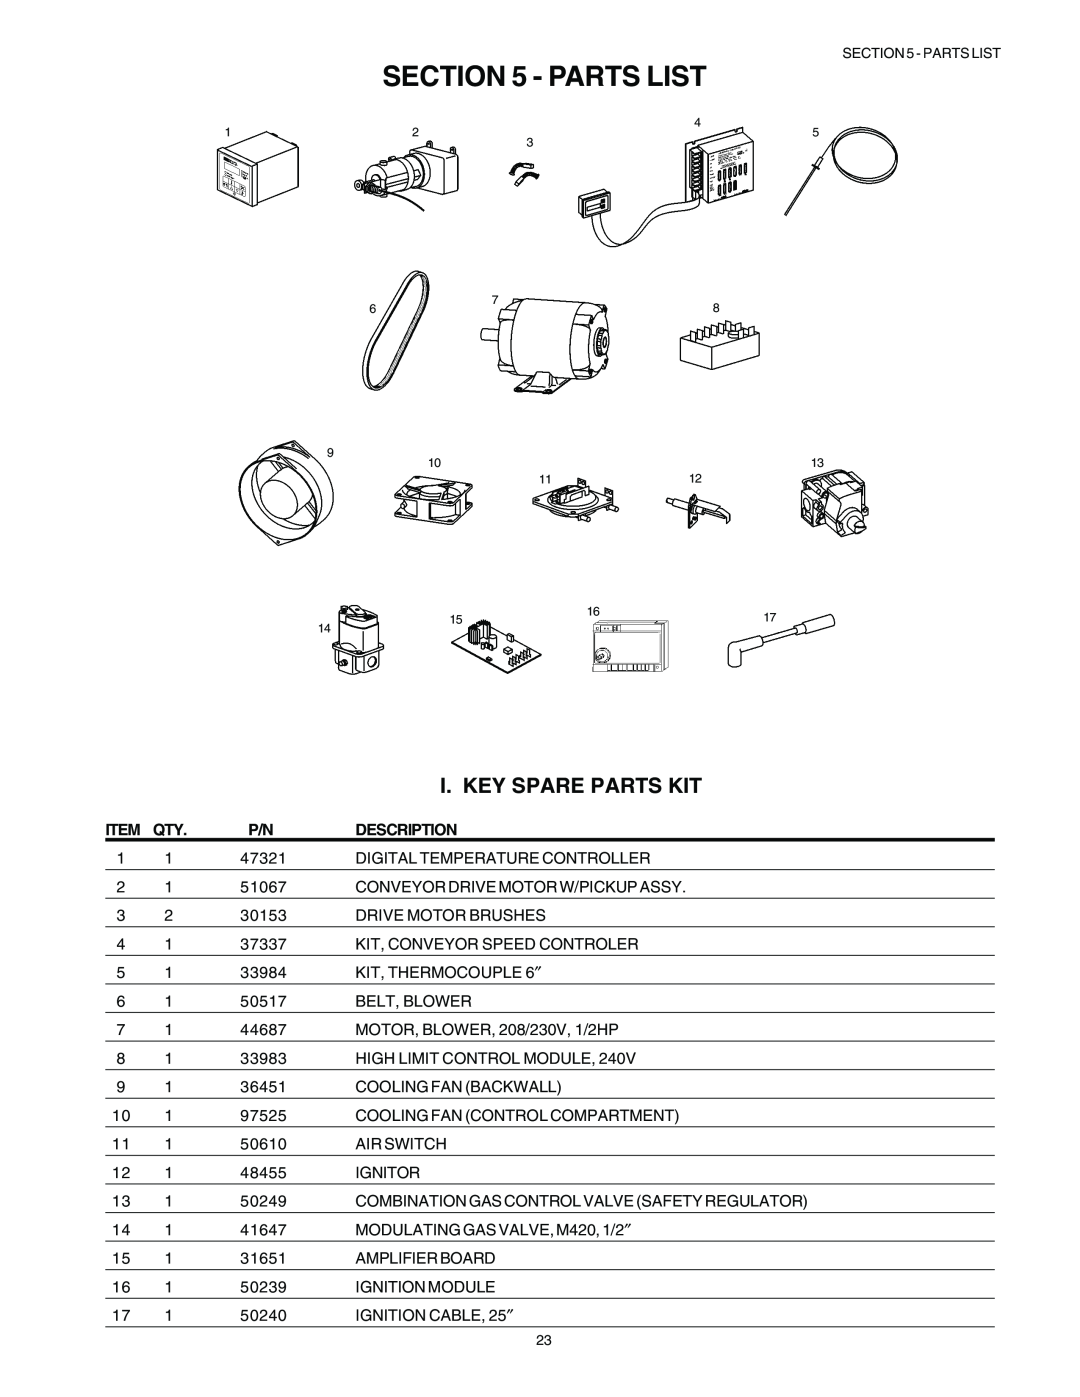 Blodgett BG2136 manual Parts List, English, I. Key Spare Parts Kit, Description 